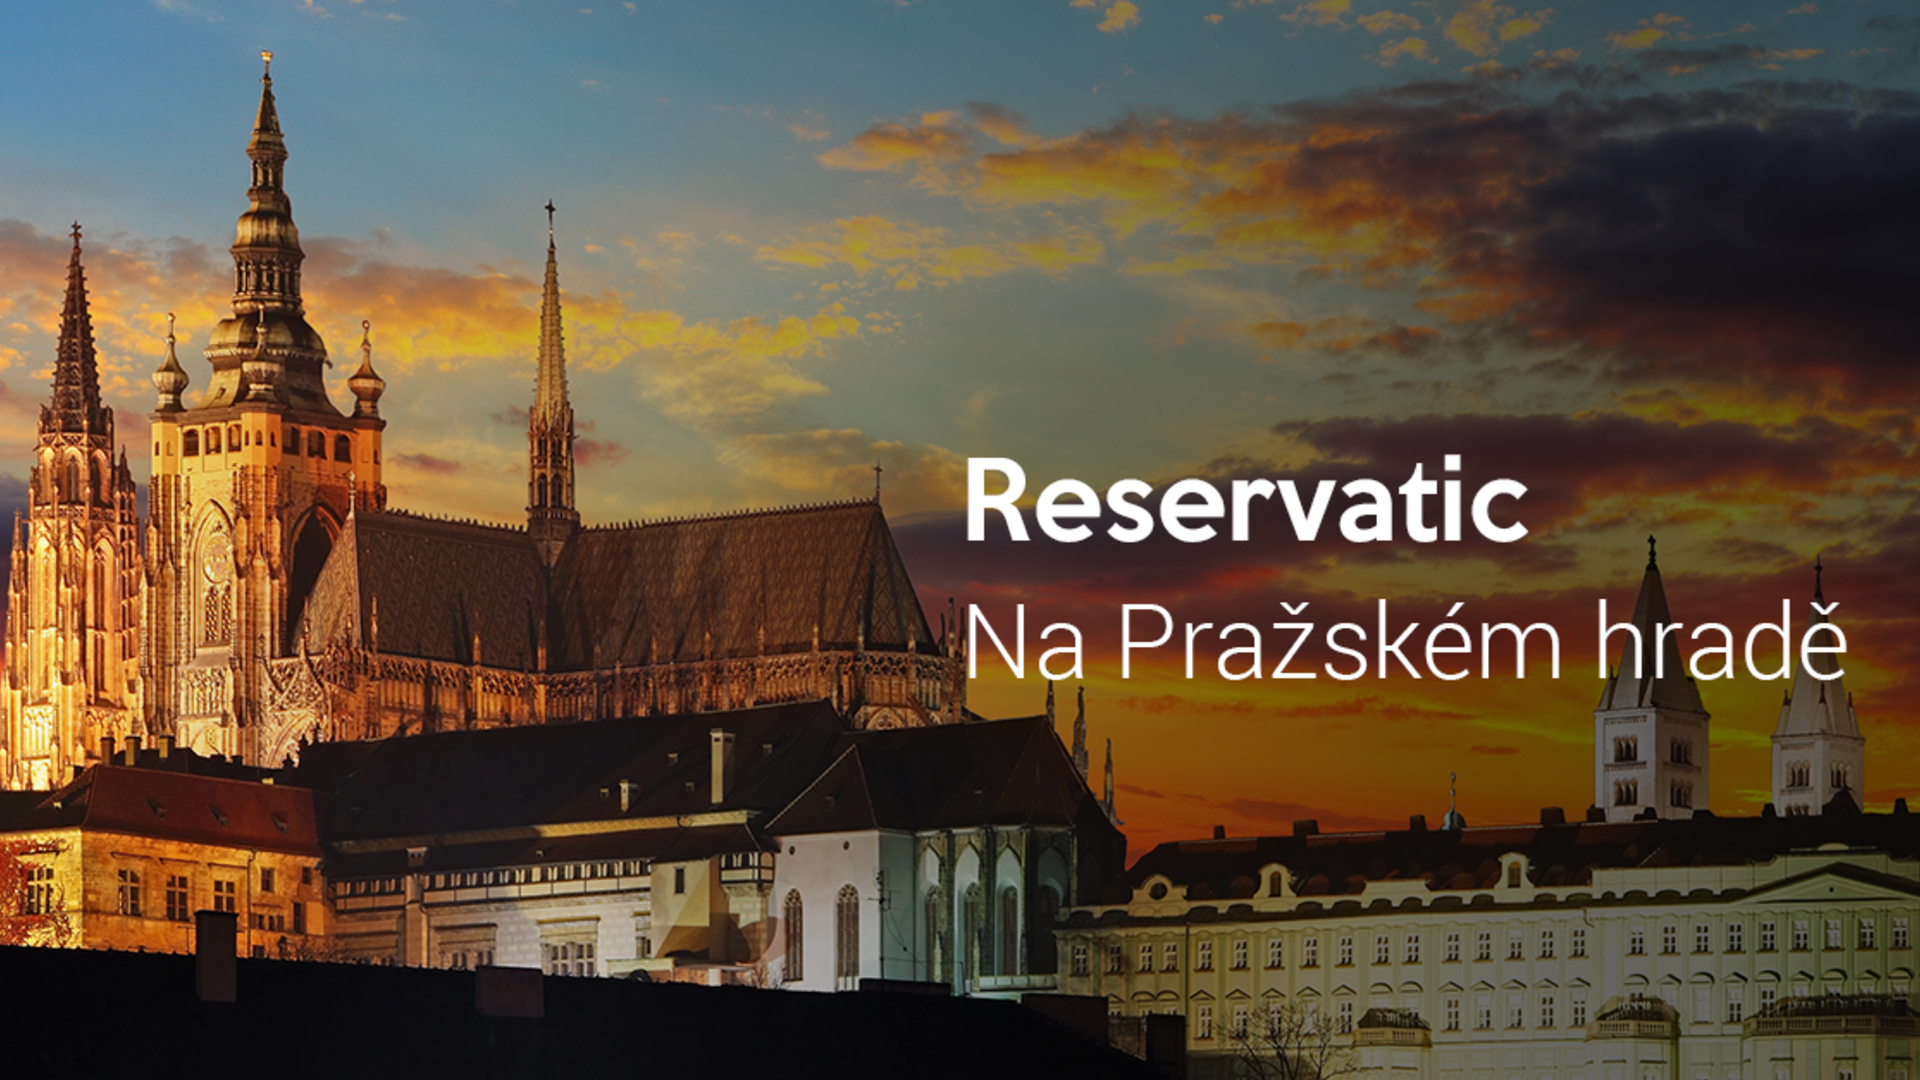 Reservatic at Prague Castle